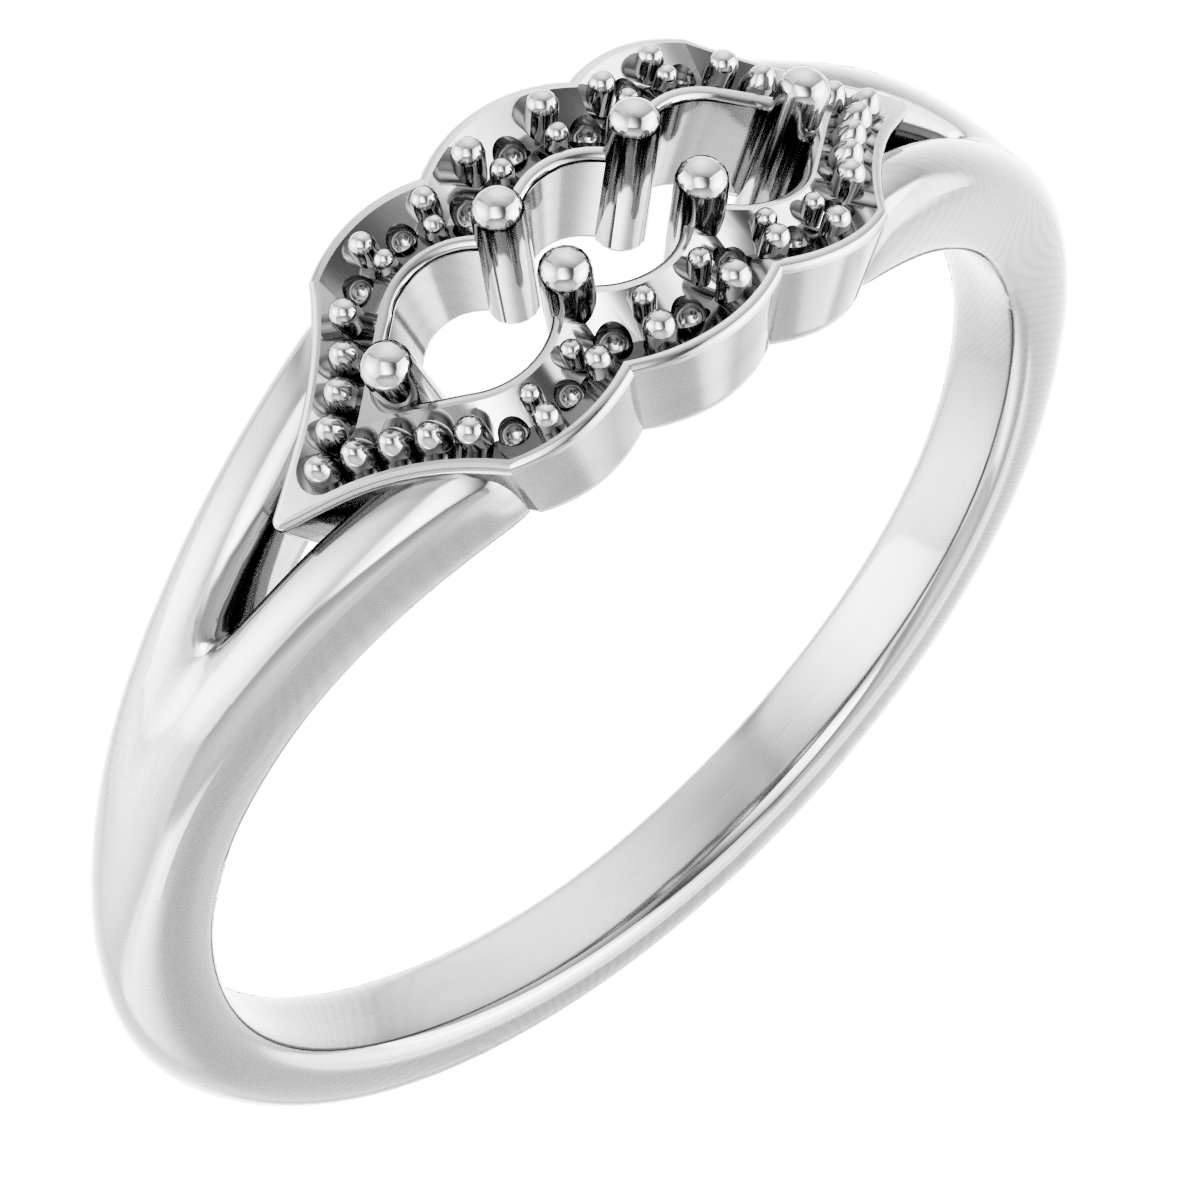 https://meteor.stullercloud.com/das/73430500?obj=metals&obj=stones/diamonds/g_center&obj=stones/diamonds/g_accent&obj=metals&obj.recipe=white&$xlarge$